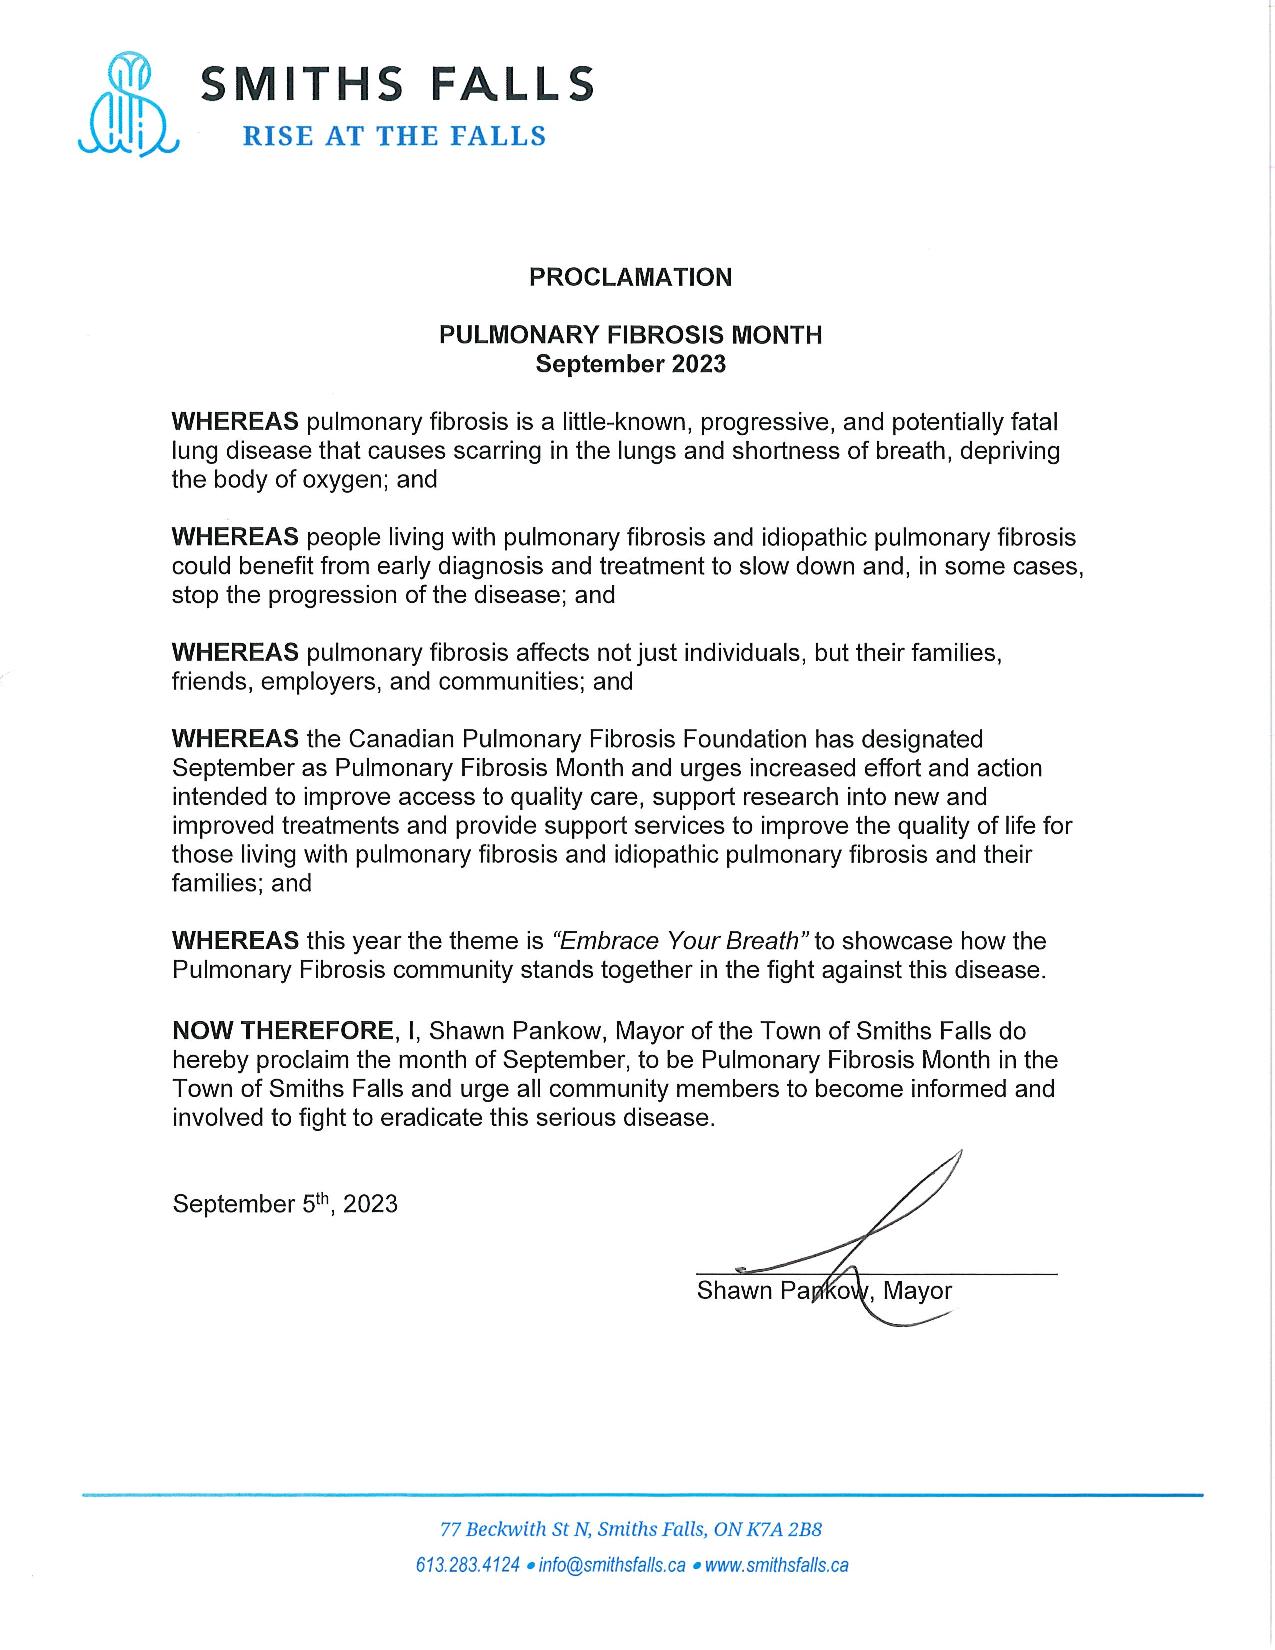 Mayor's Proclamation on Pulmonary Fibrosis month